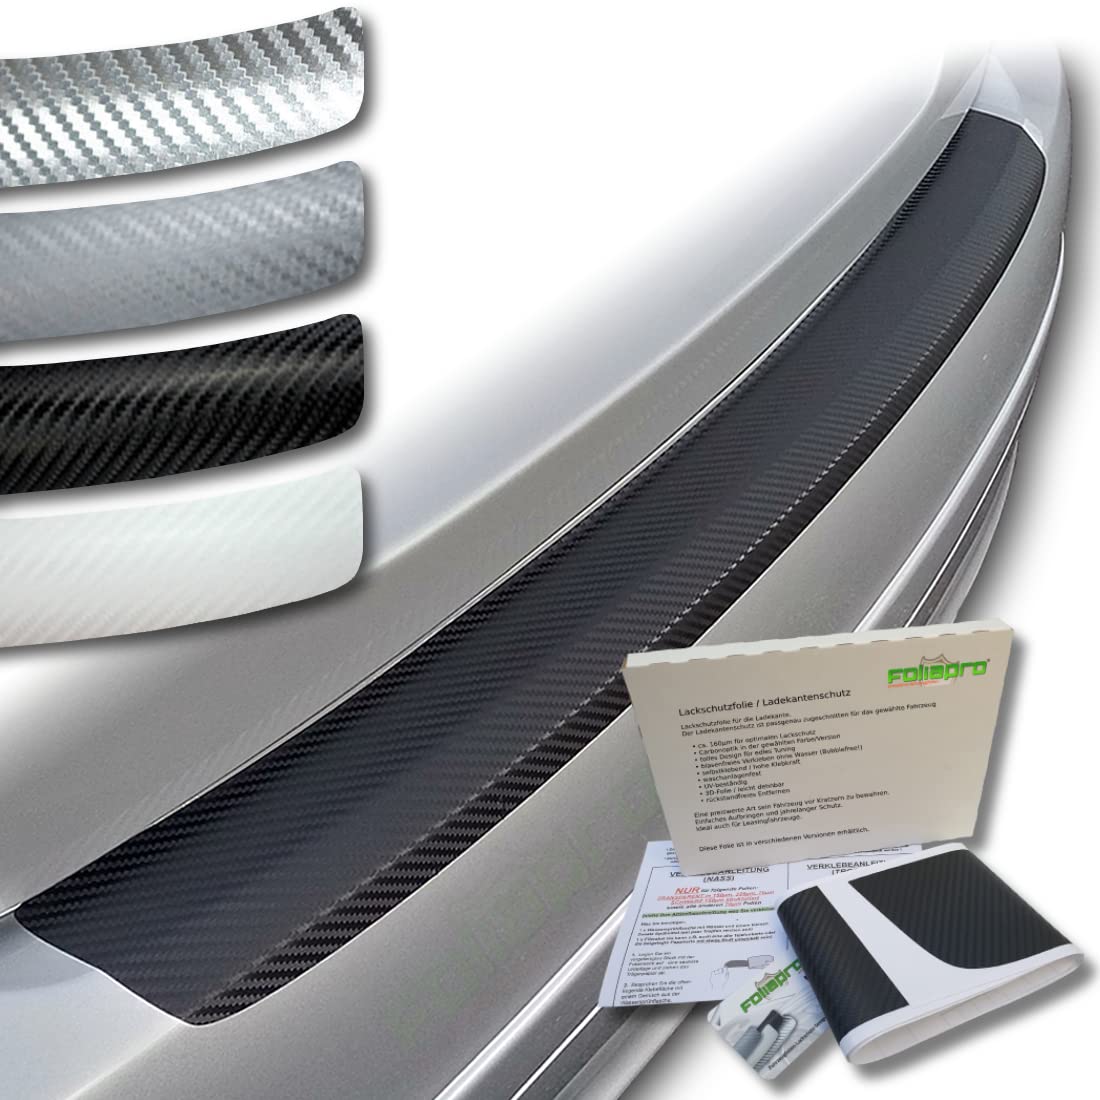 foliapro Lackschutzfolie Ladekantenschutz-Folie Carbonfolie Carbon - Fahrzeug und Foliensorte wählbar - für Audi A4/S4 Limousine B9 ab 2015 bis 2022 - Carbon schwarz von foliapro